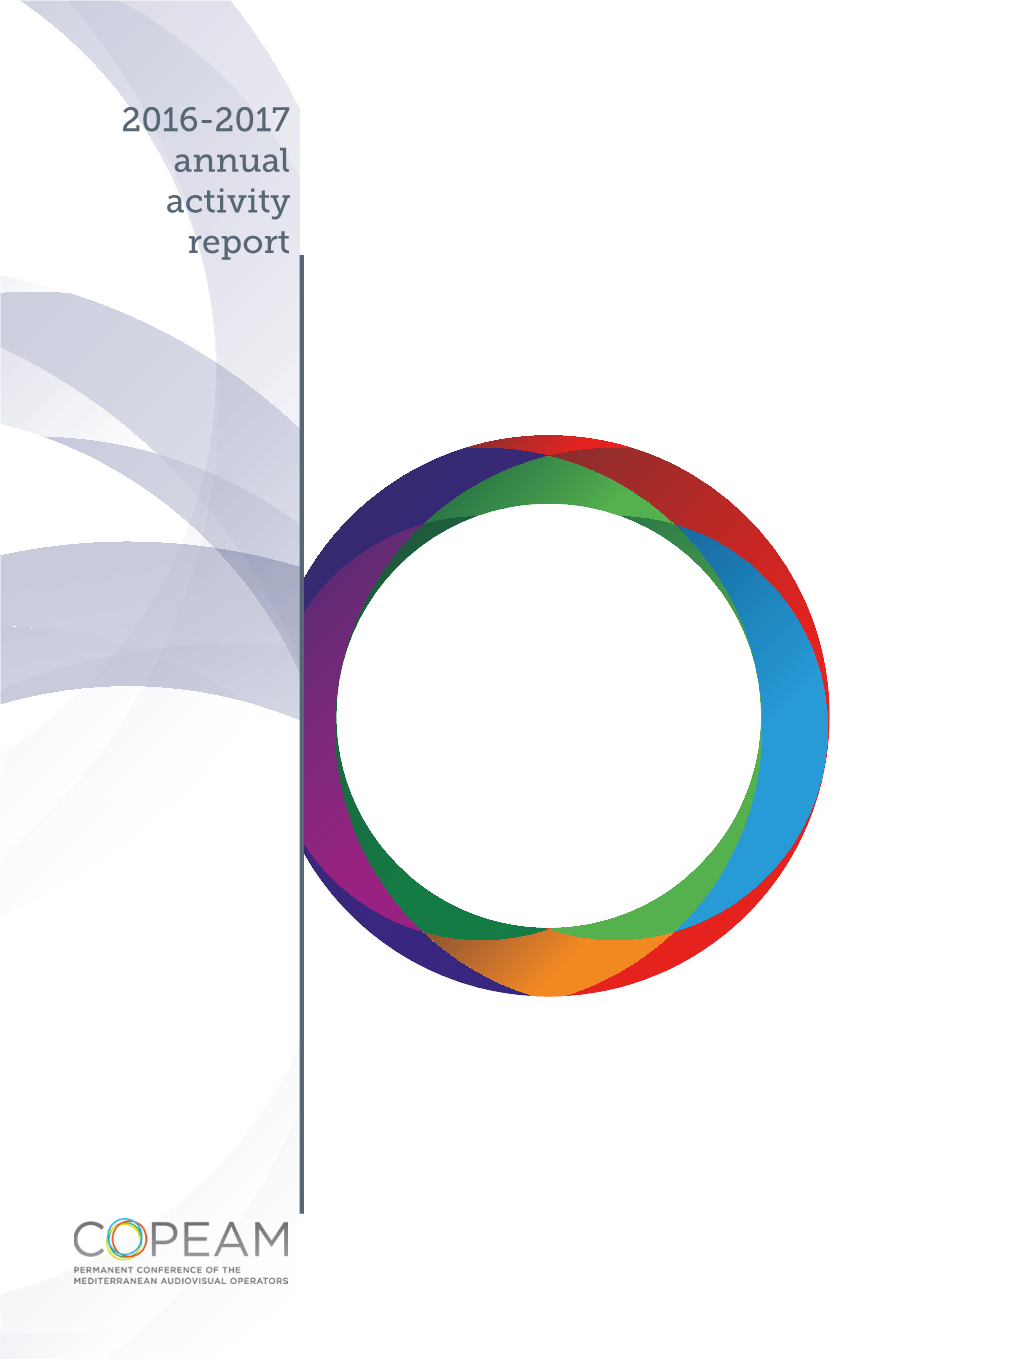 2016-2017 Annual Activity Report